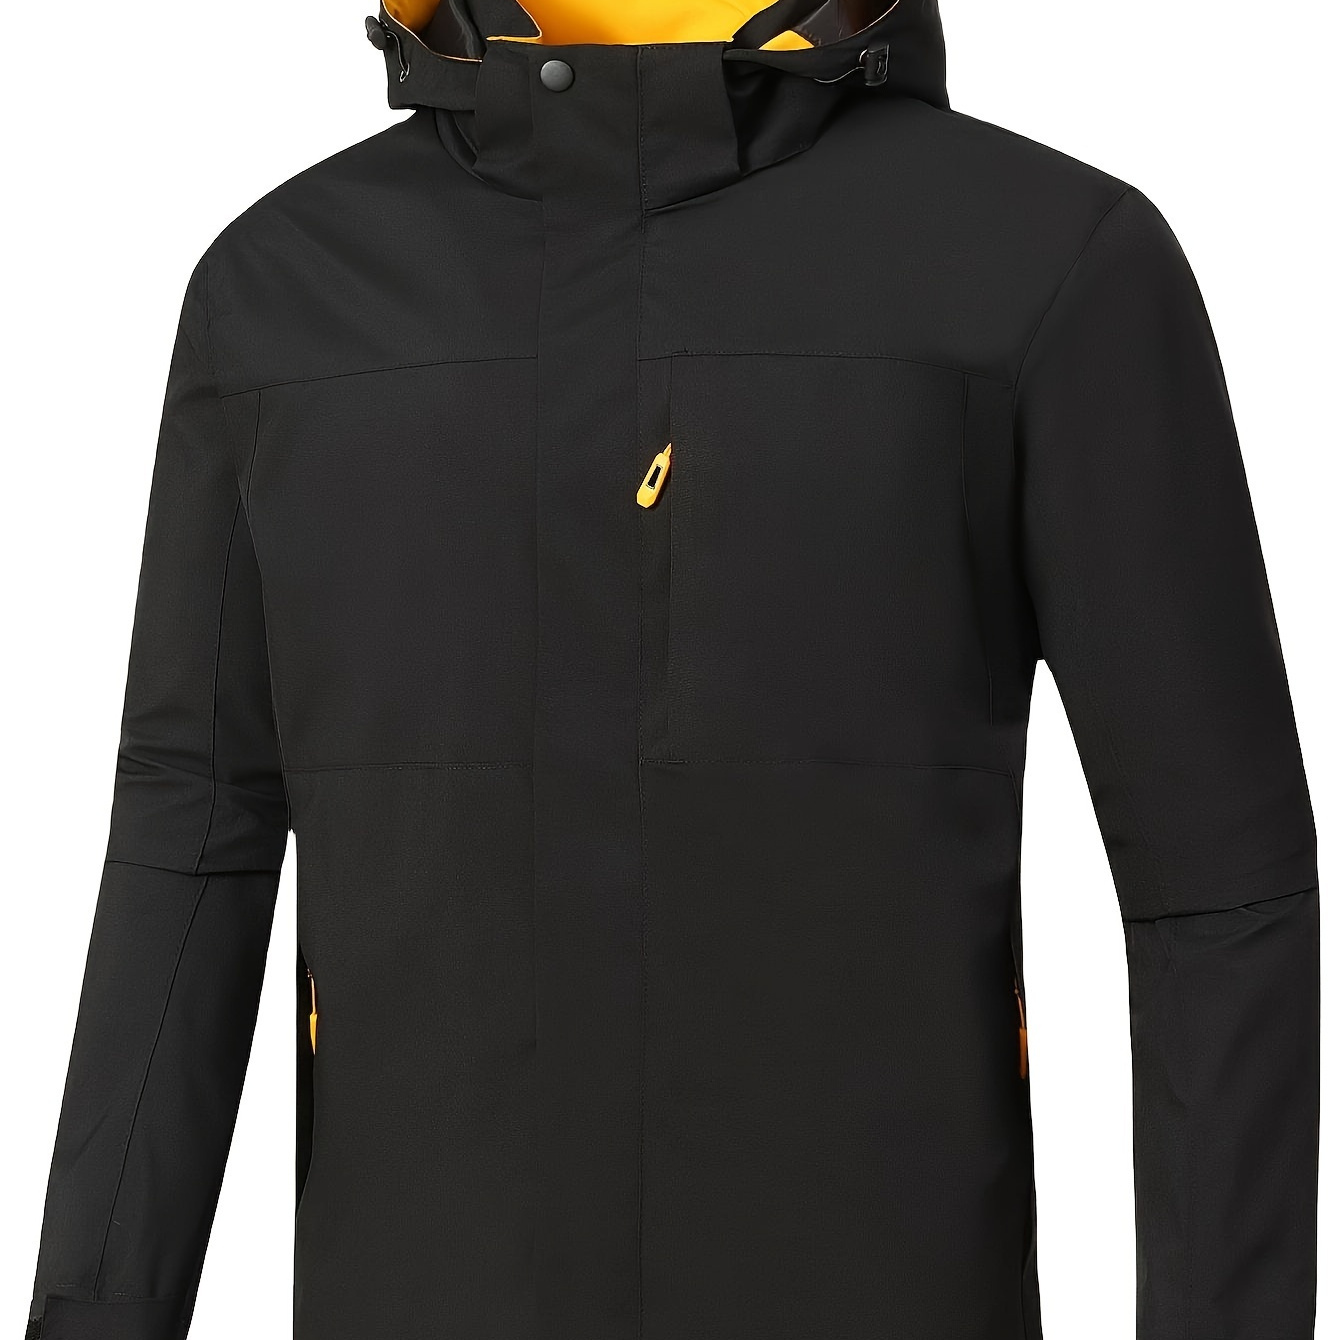 

Men's Contrast Color Hooded Long Sleeve Zip Up Windbreaker Jacket, Waterproof Sports Jacket Versatile For Outdoors And Sports Leisurewear